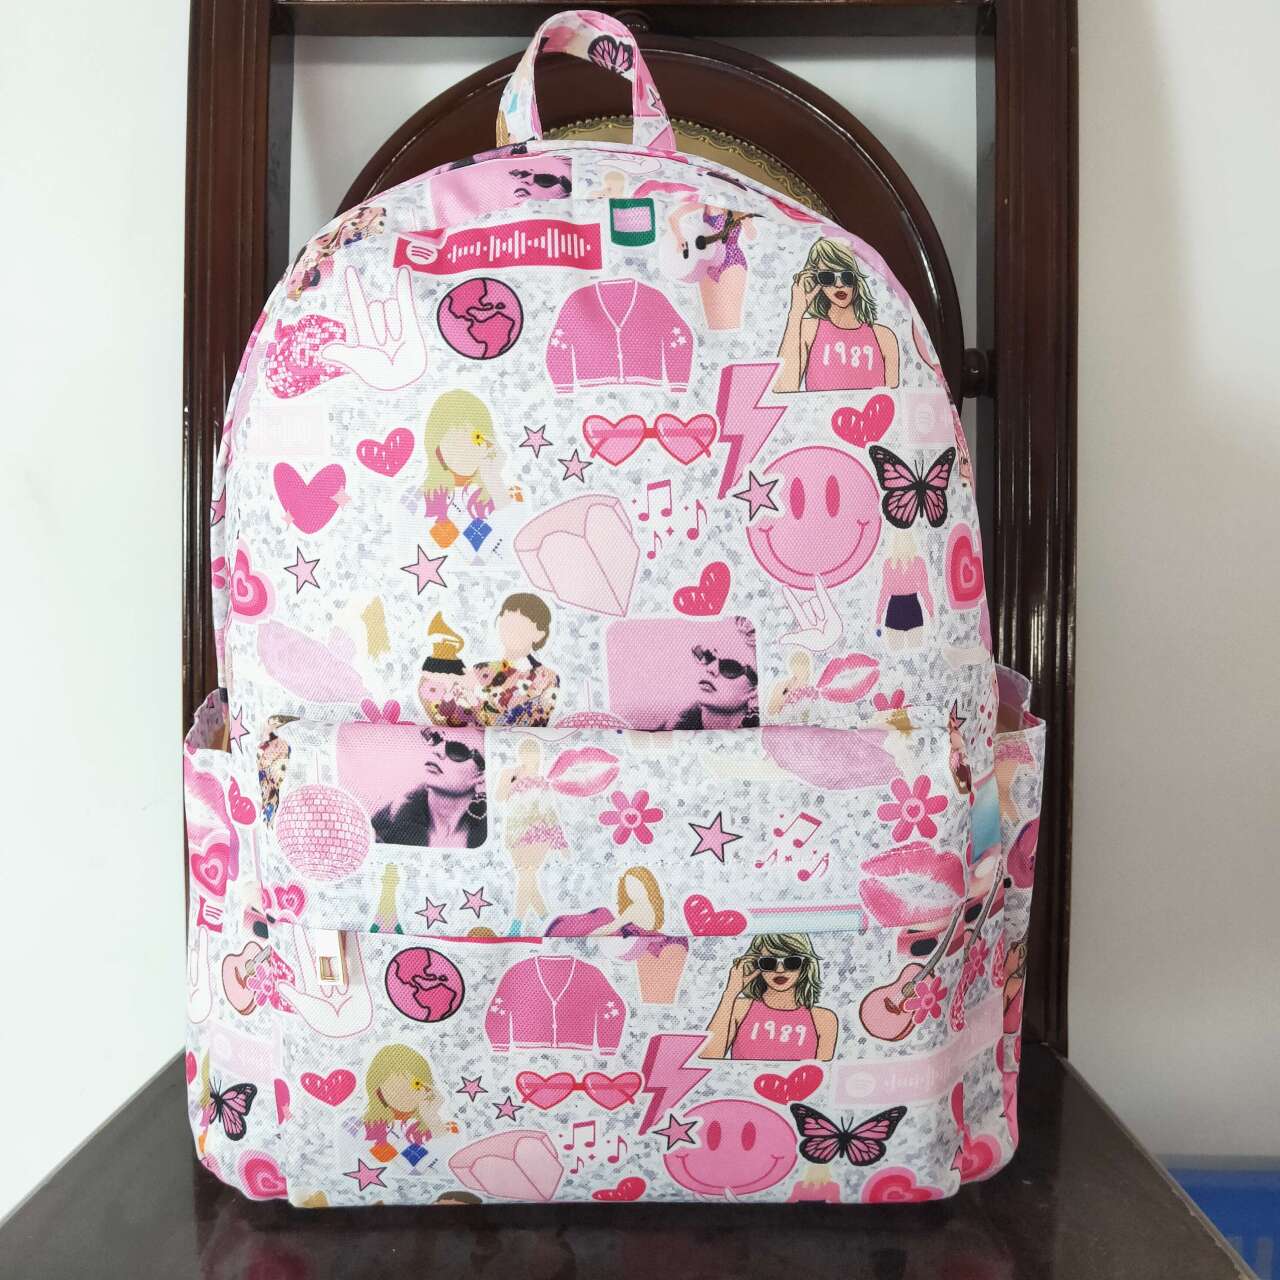 BA0164 Kids Girls Country Singer Backpack School Bag Restocking